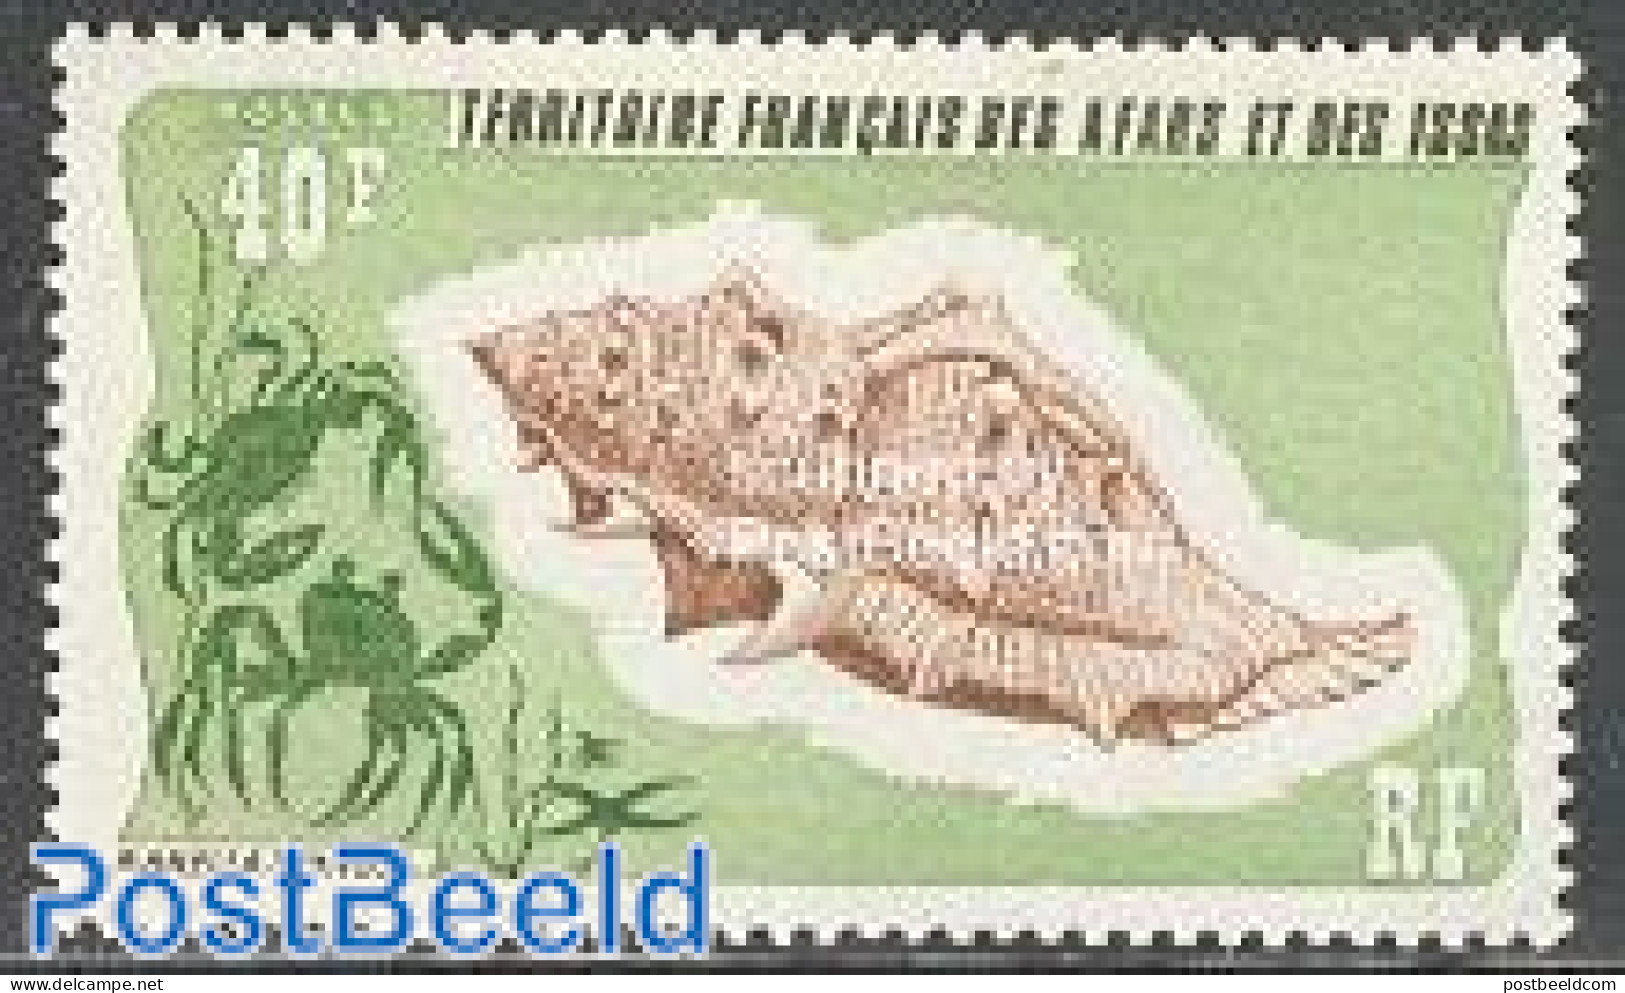 Afars And Issas 1975 Shells 1v, Mint NH, Nature - Shells & Crustaceans - Ongebruikt